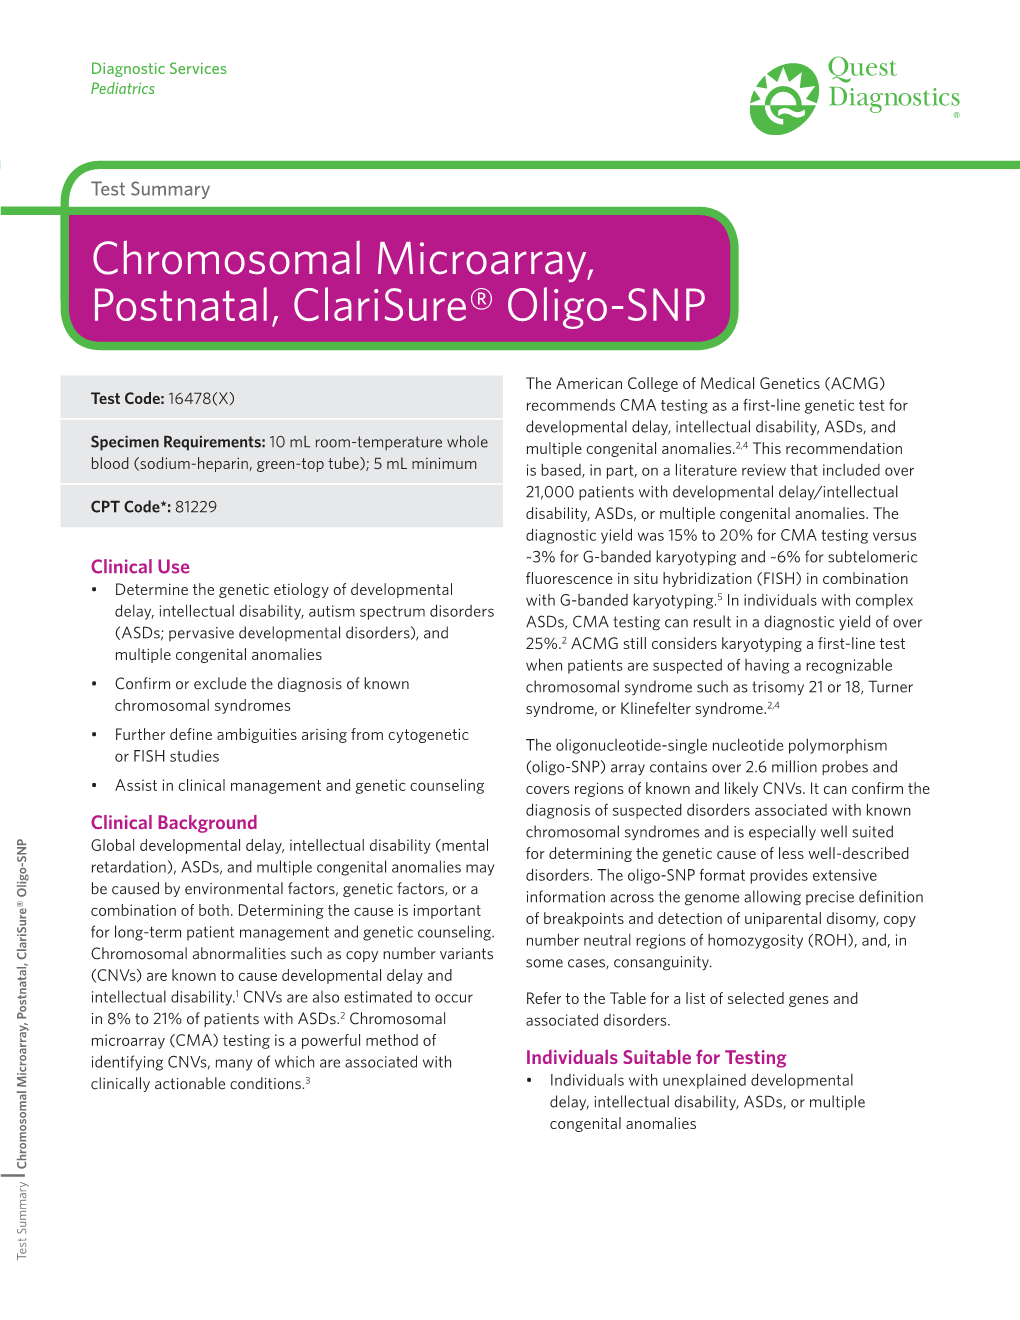 Chromosomal Microarray, Postnatal, Clarisure® Oligo-SNP